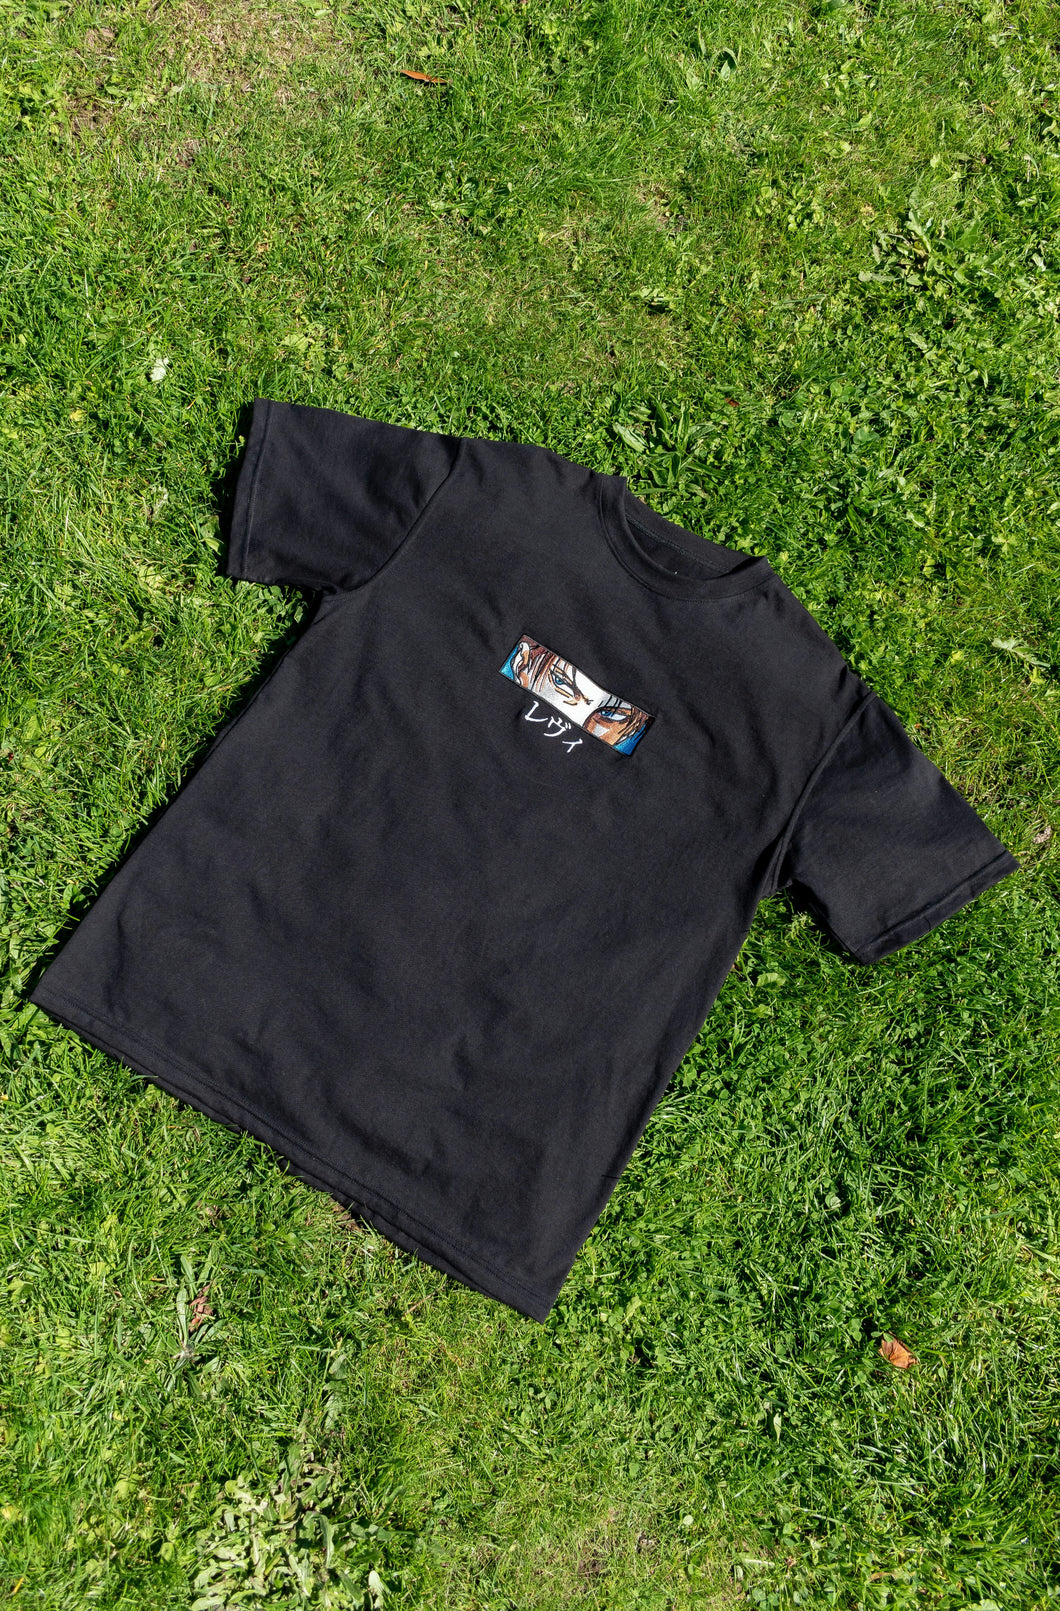 Levi Embroidered Black T-Shirt (Pre-Order)